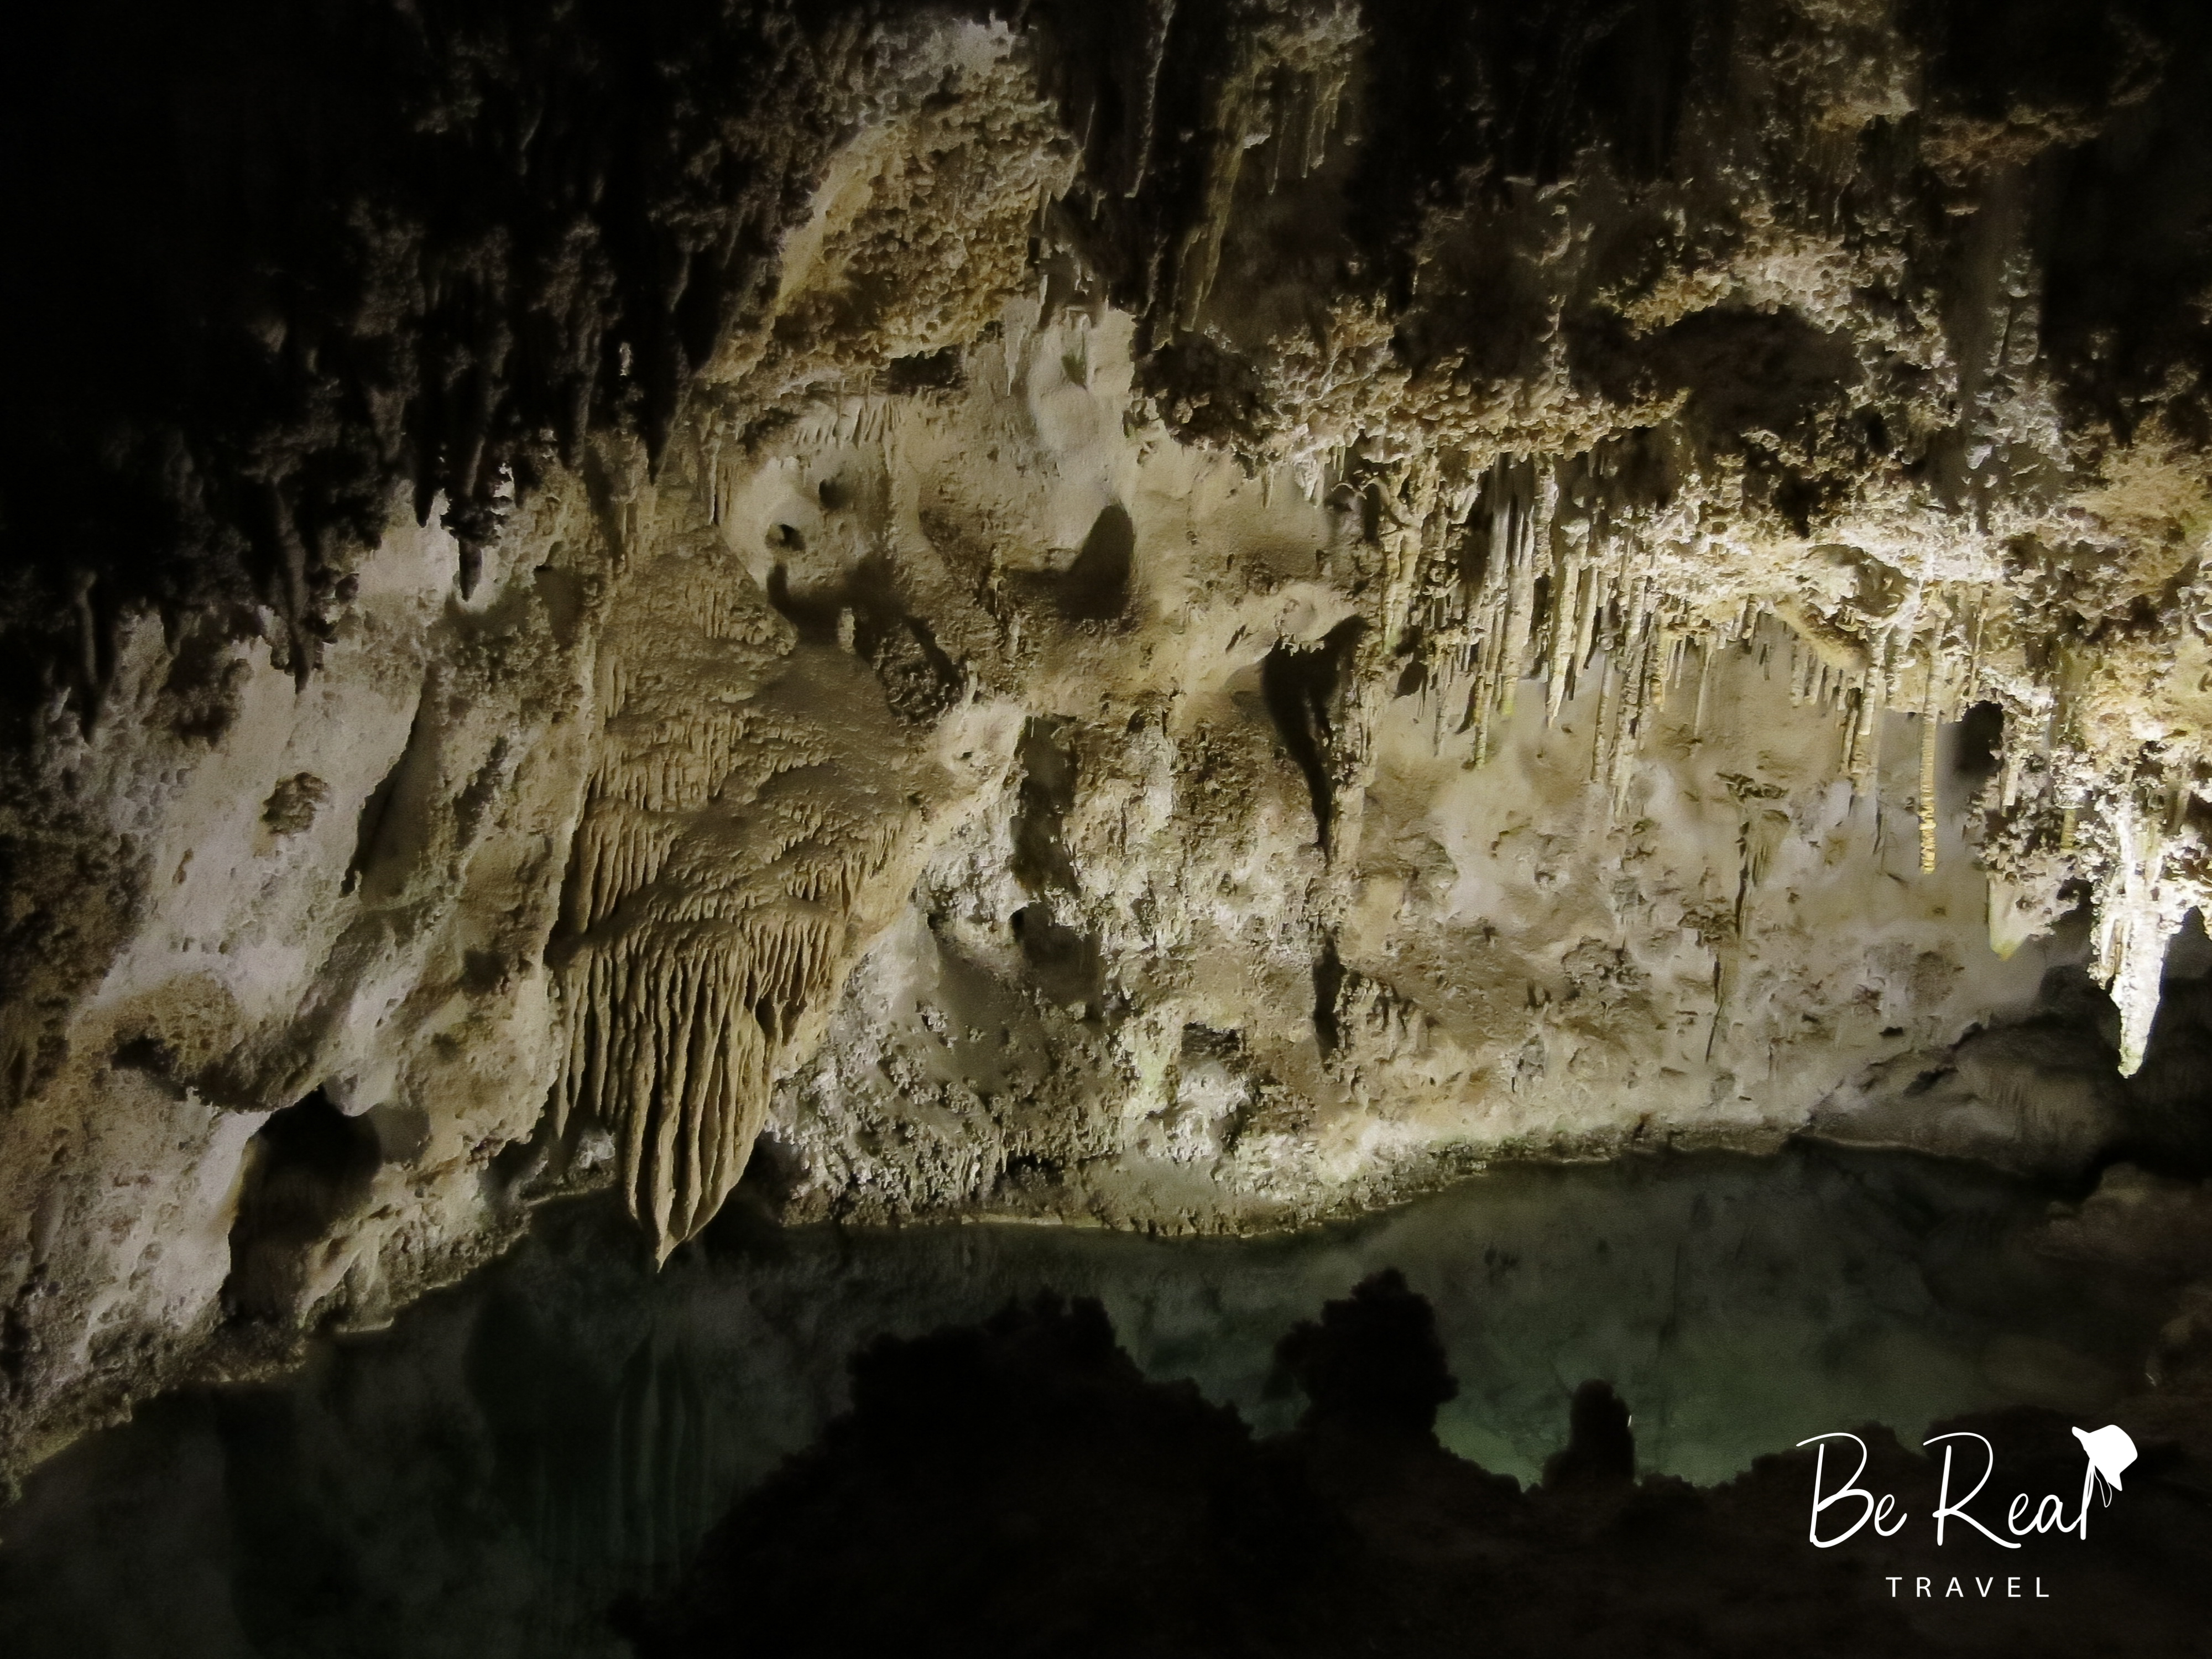 Mineral formations hang above cave water at Carlsbad Caverns National Park